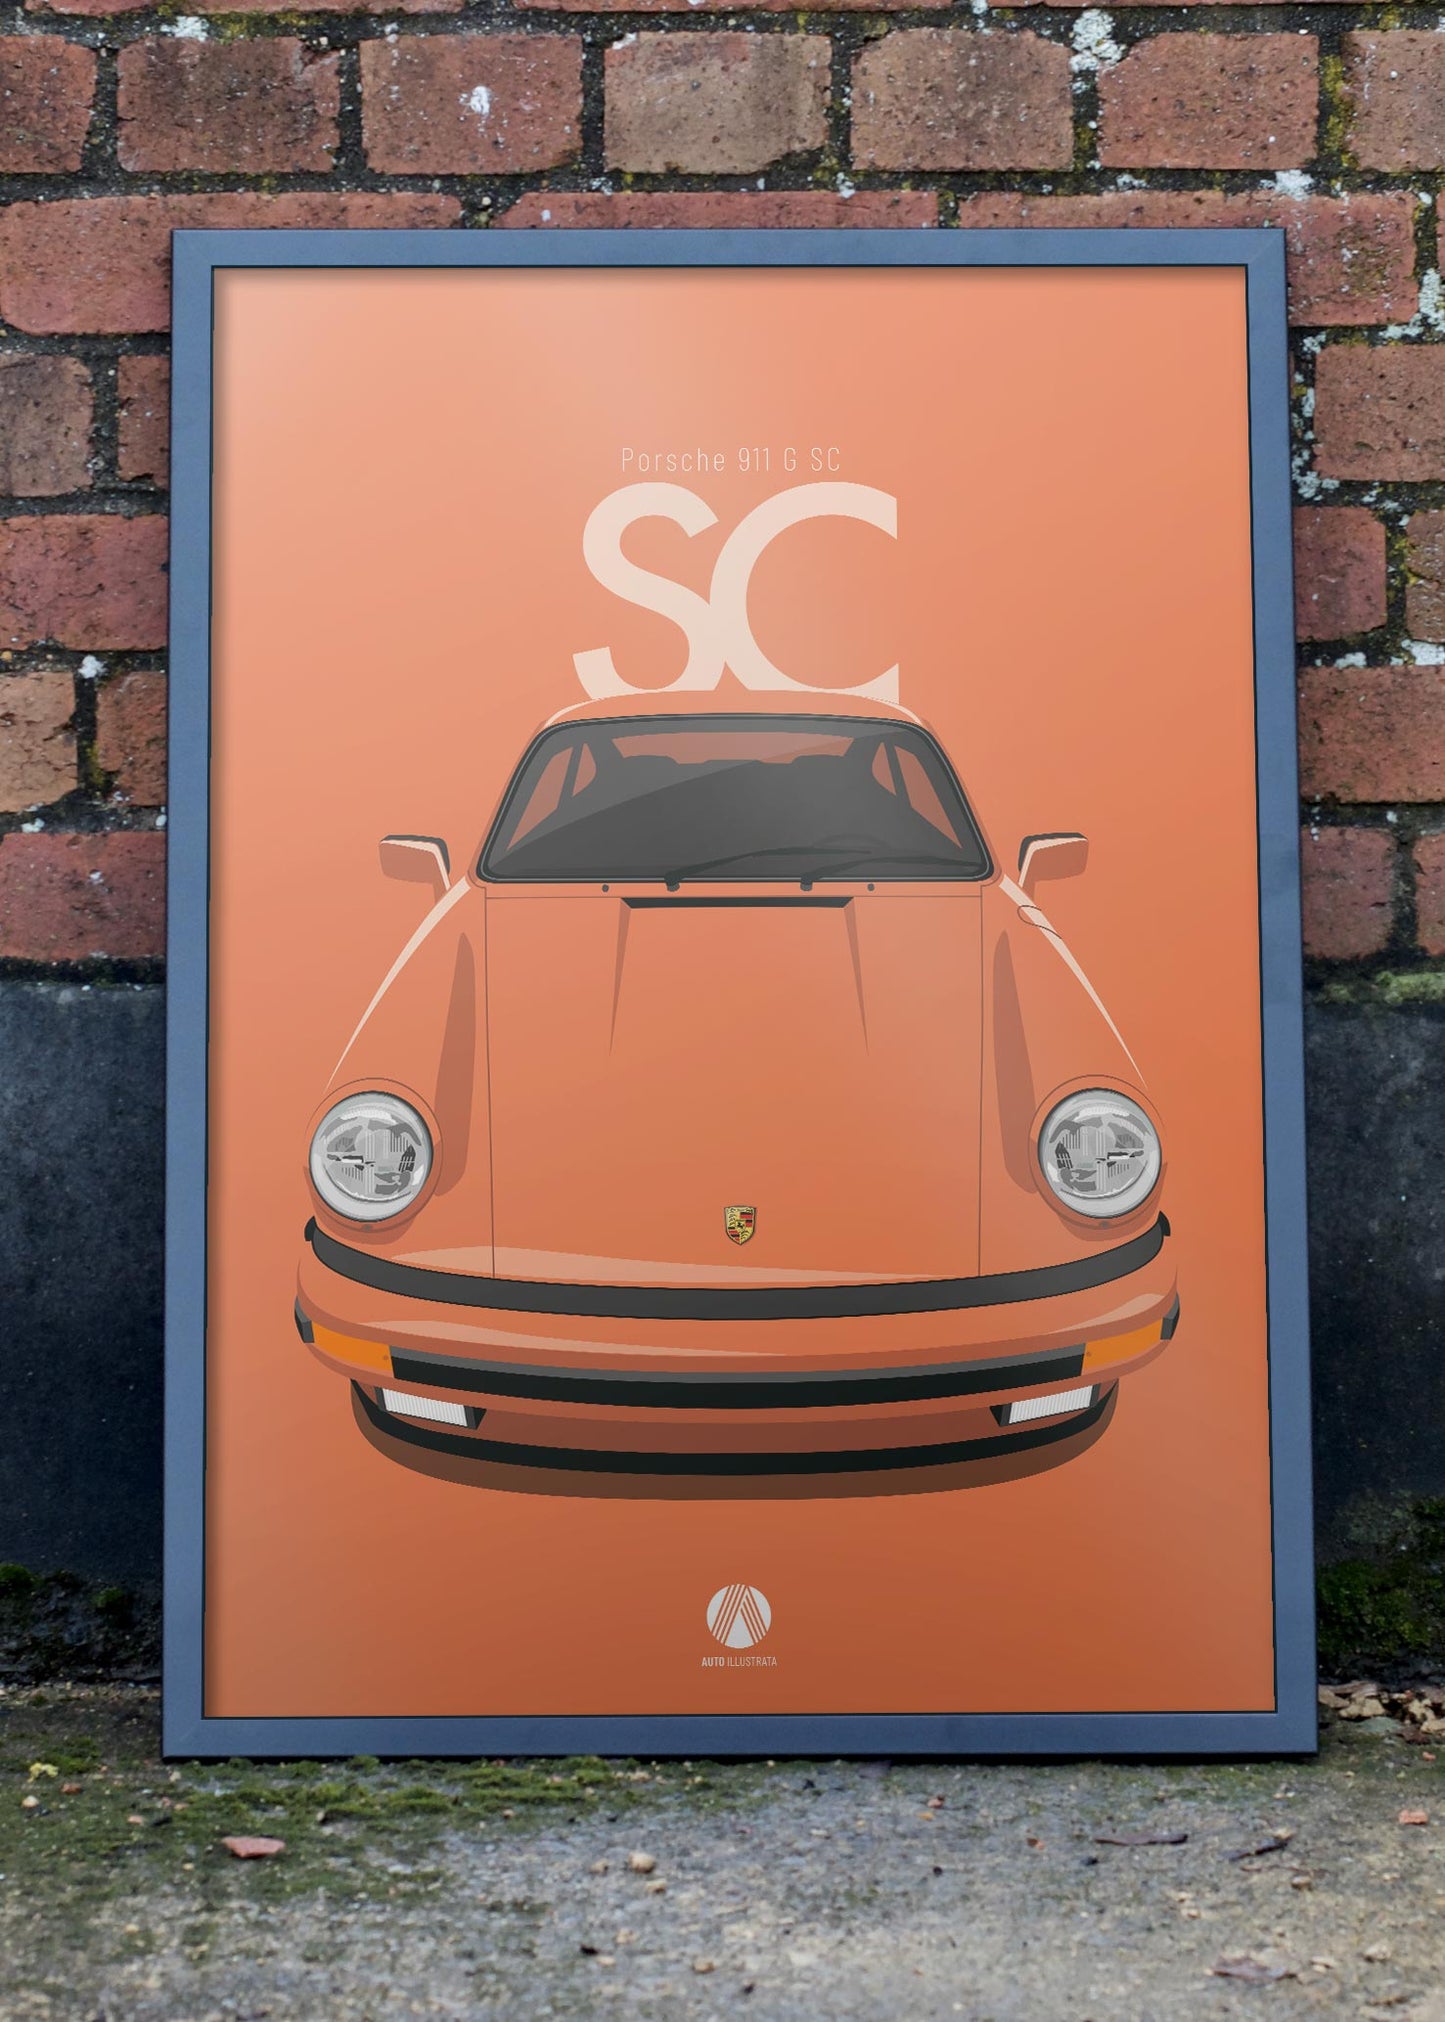 1982 Porsche 911 SC - 524 Burnusbraun - poster print